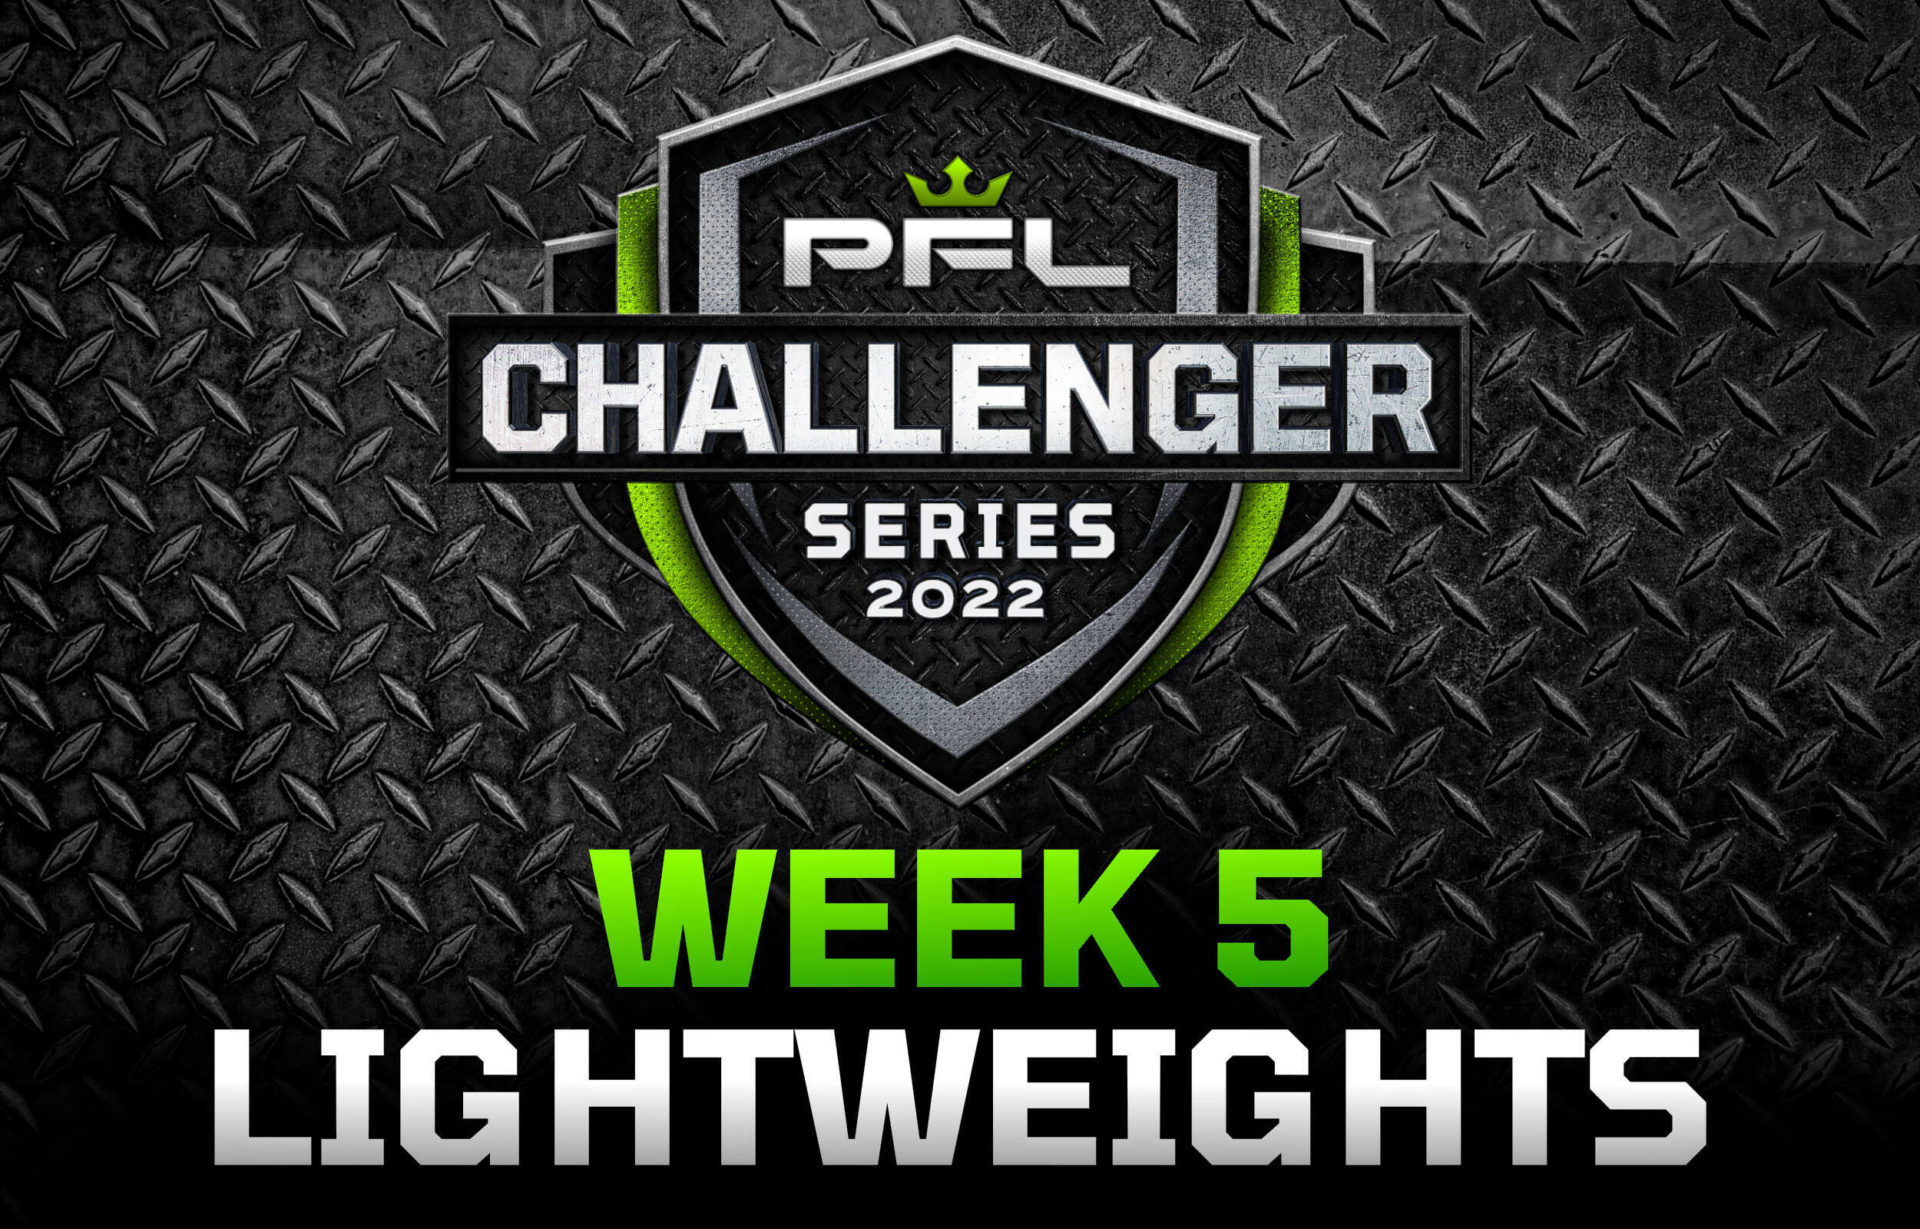 PFL Challenger Series 2022 - Week 5